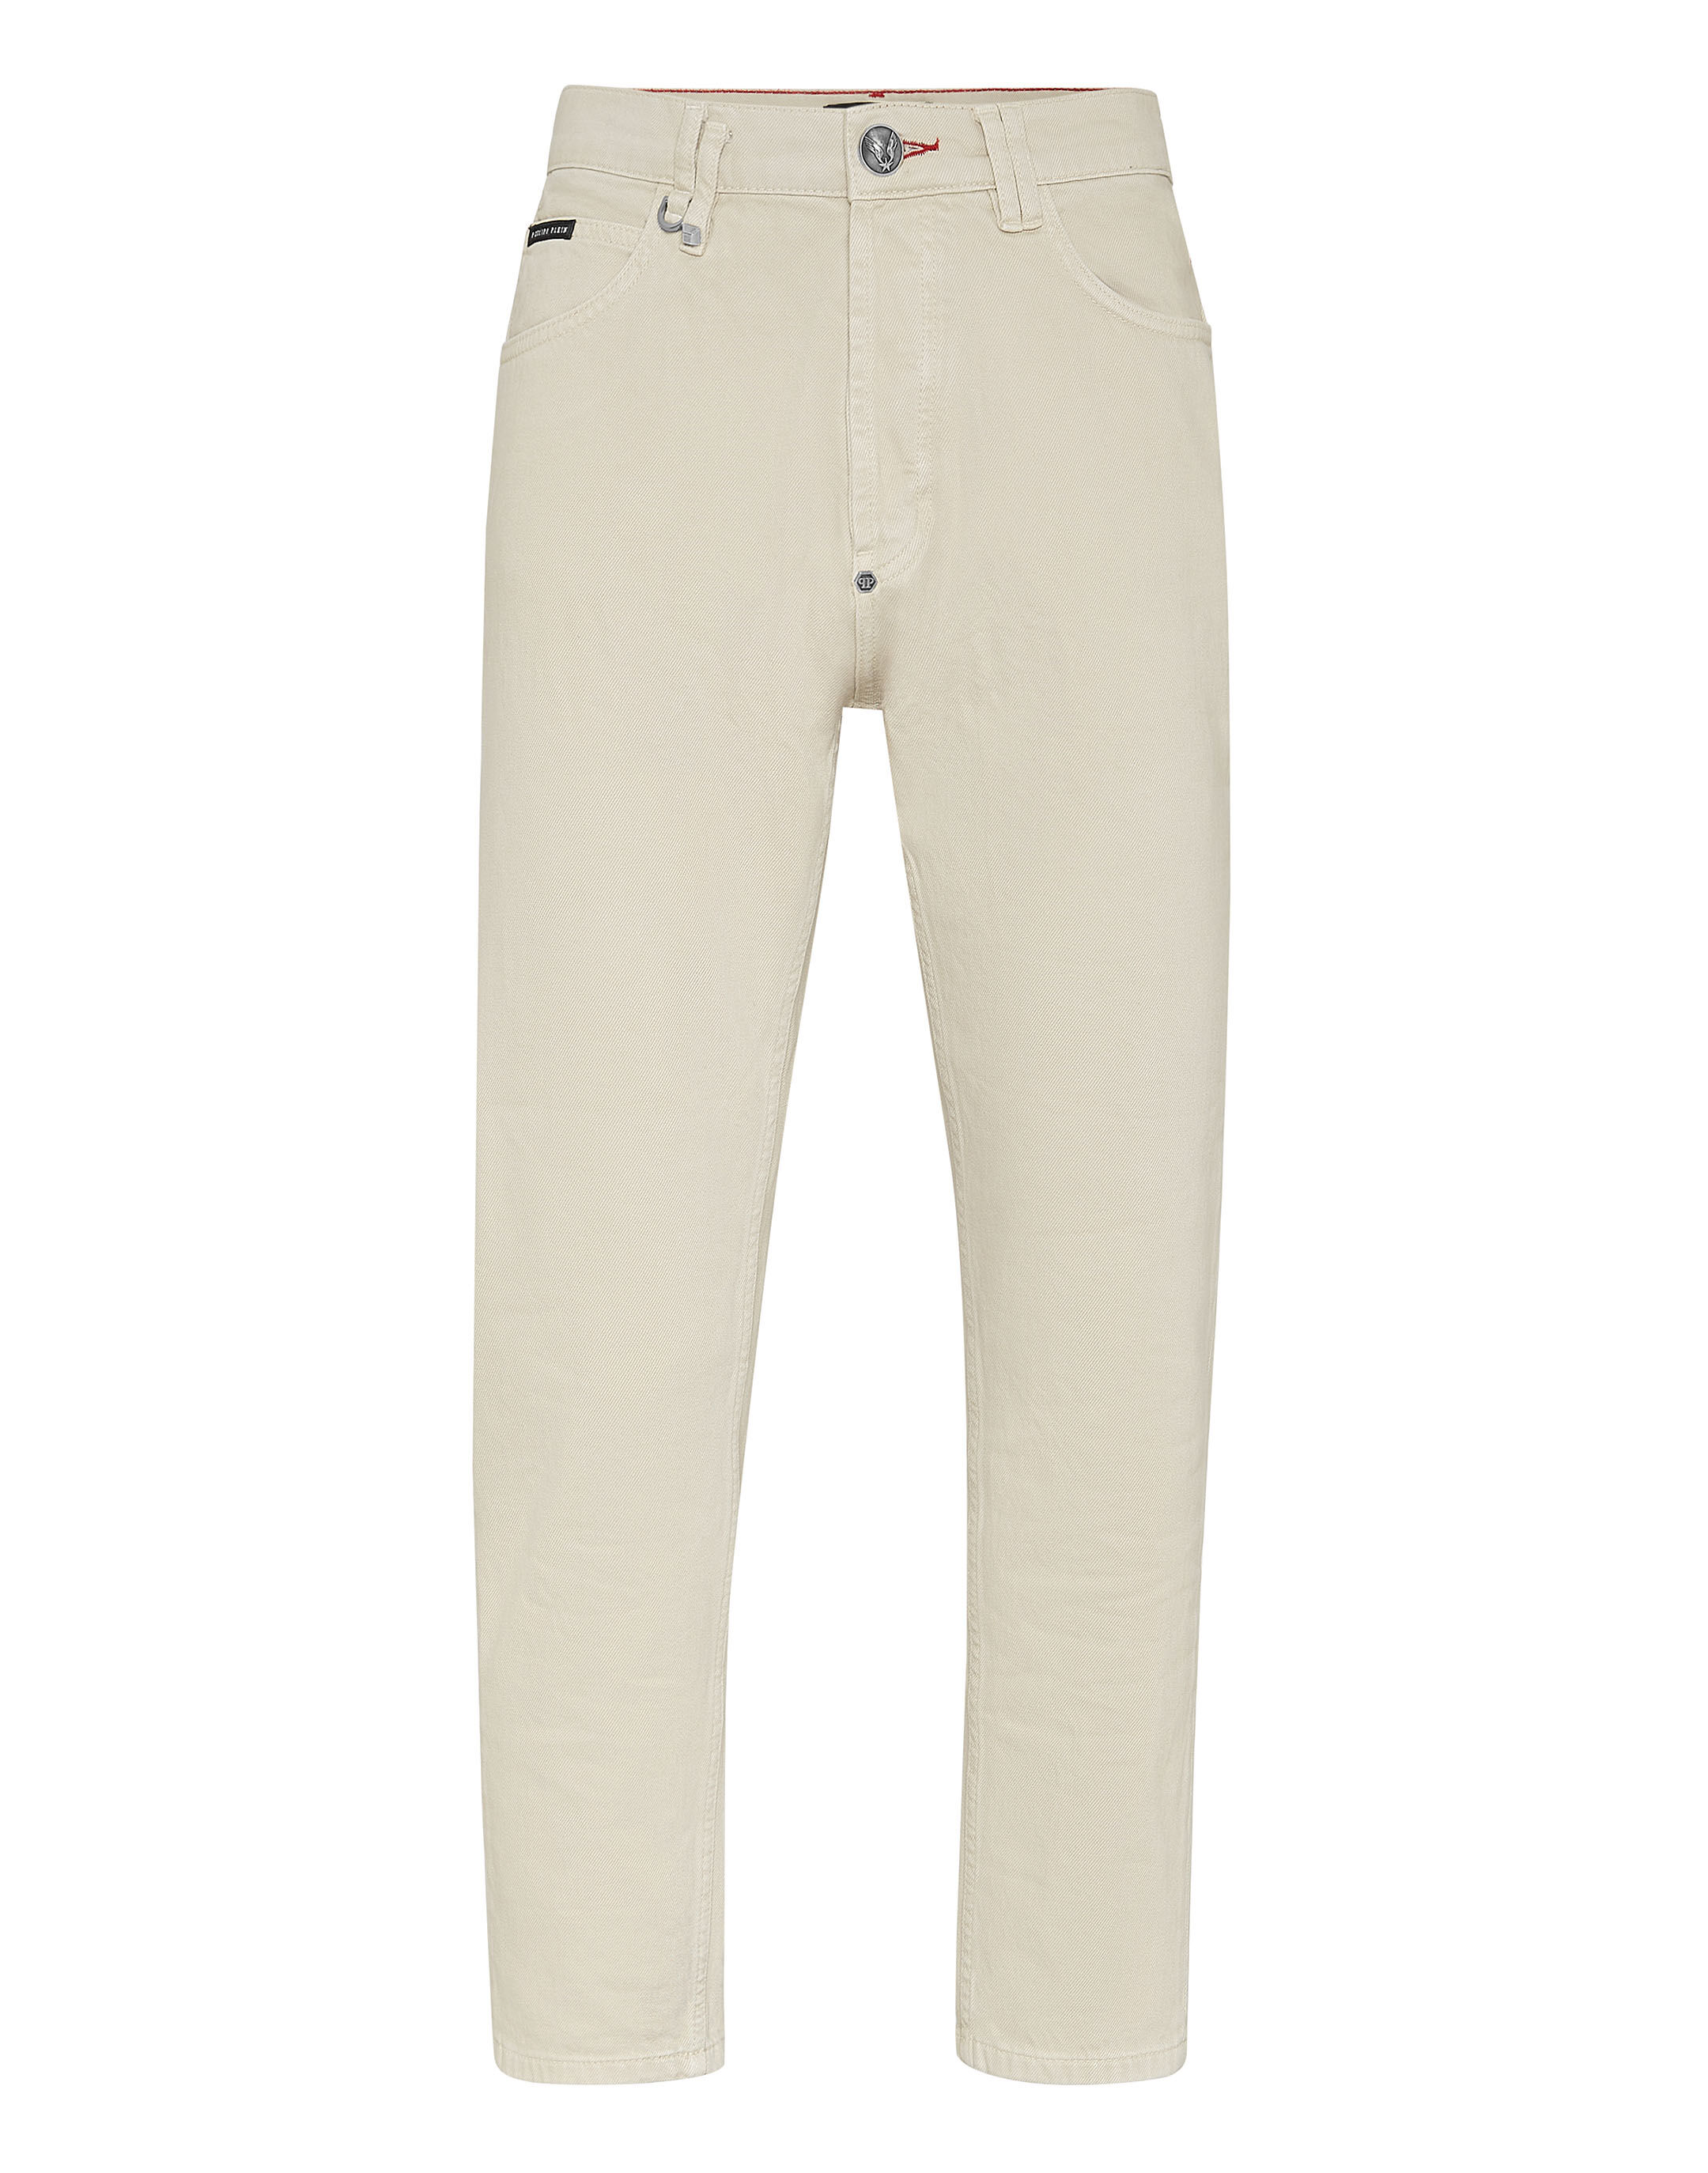 PT01 Stretch Cotton CARROT FIT Pants men - Glamood Outlet